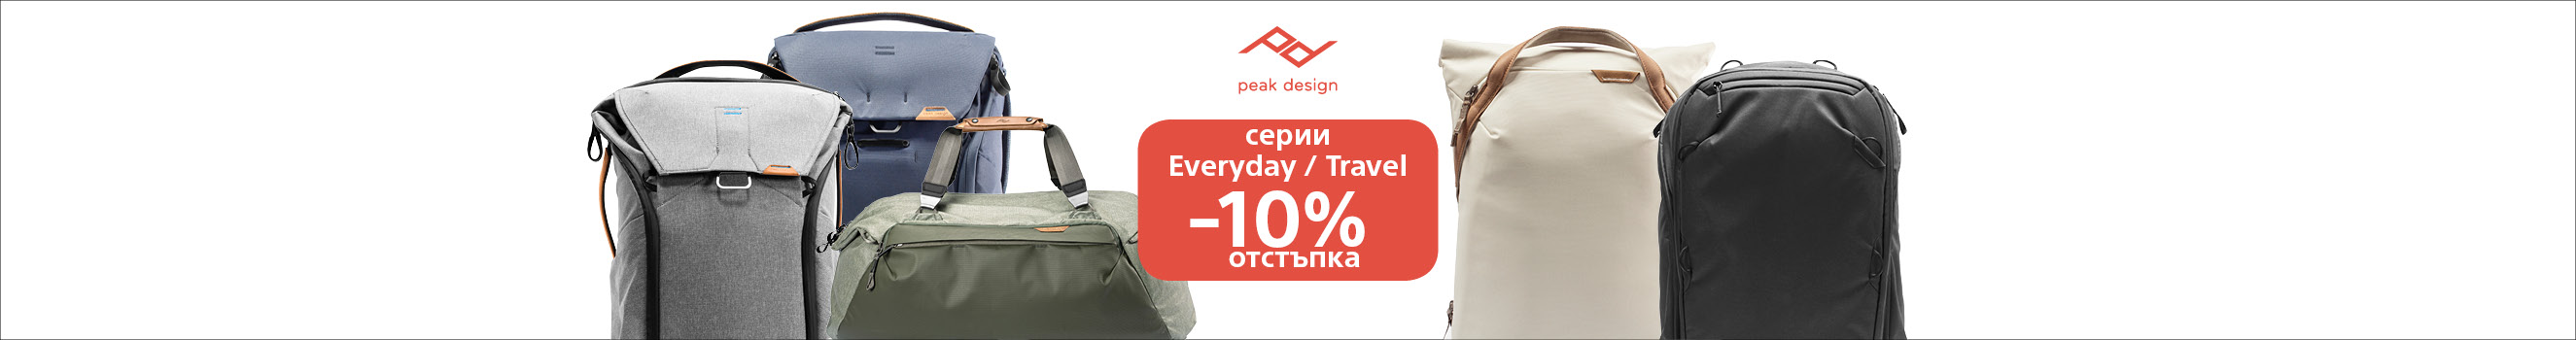  -10% for Peak Design Bags and Backpacks